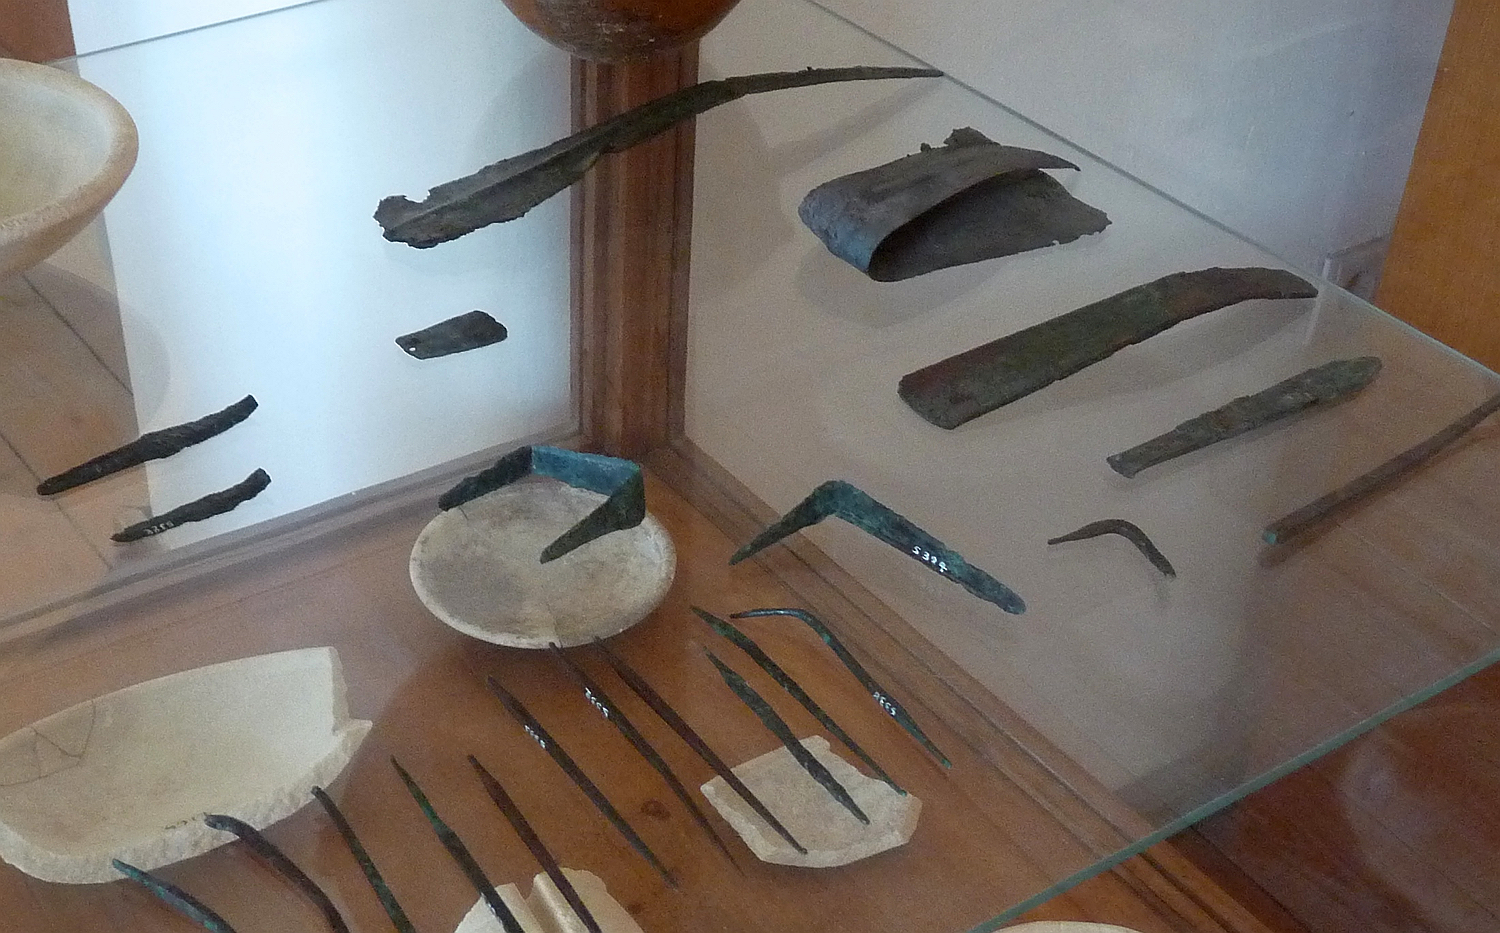 cycladic metal tools